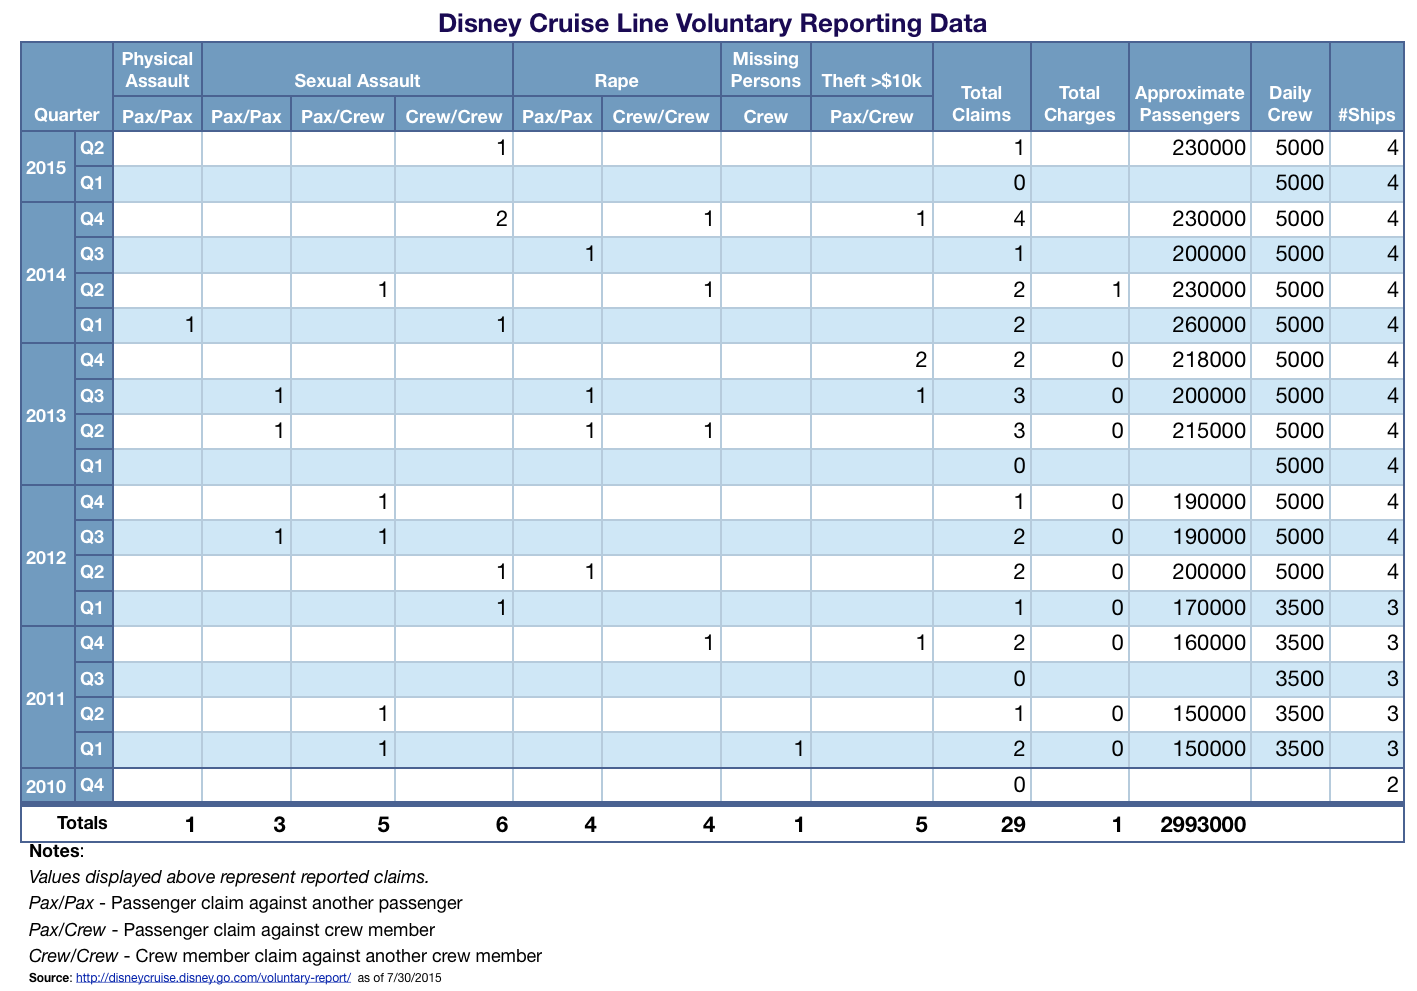 Disney Cruise Line Voluntary Reporting Data Q2 2015